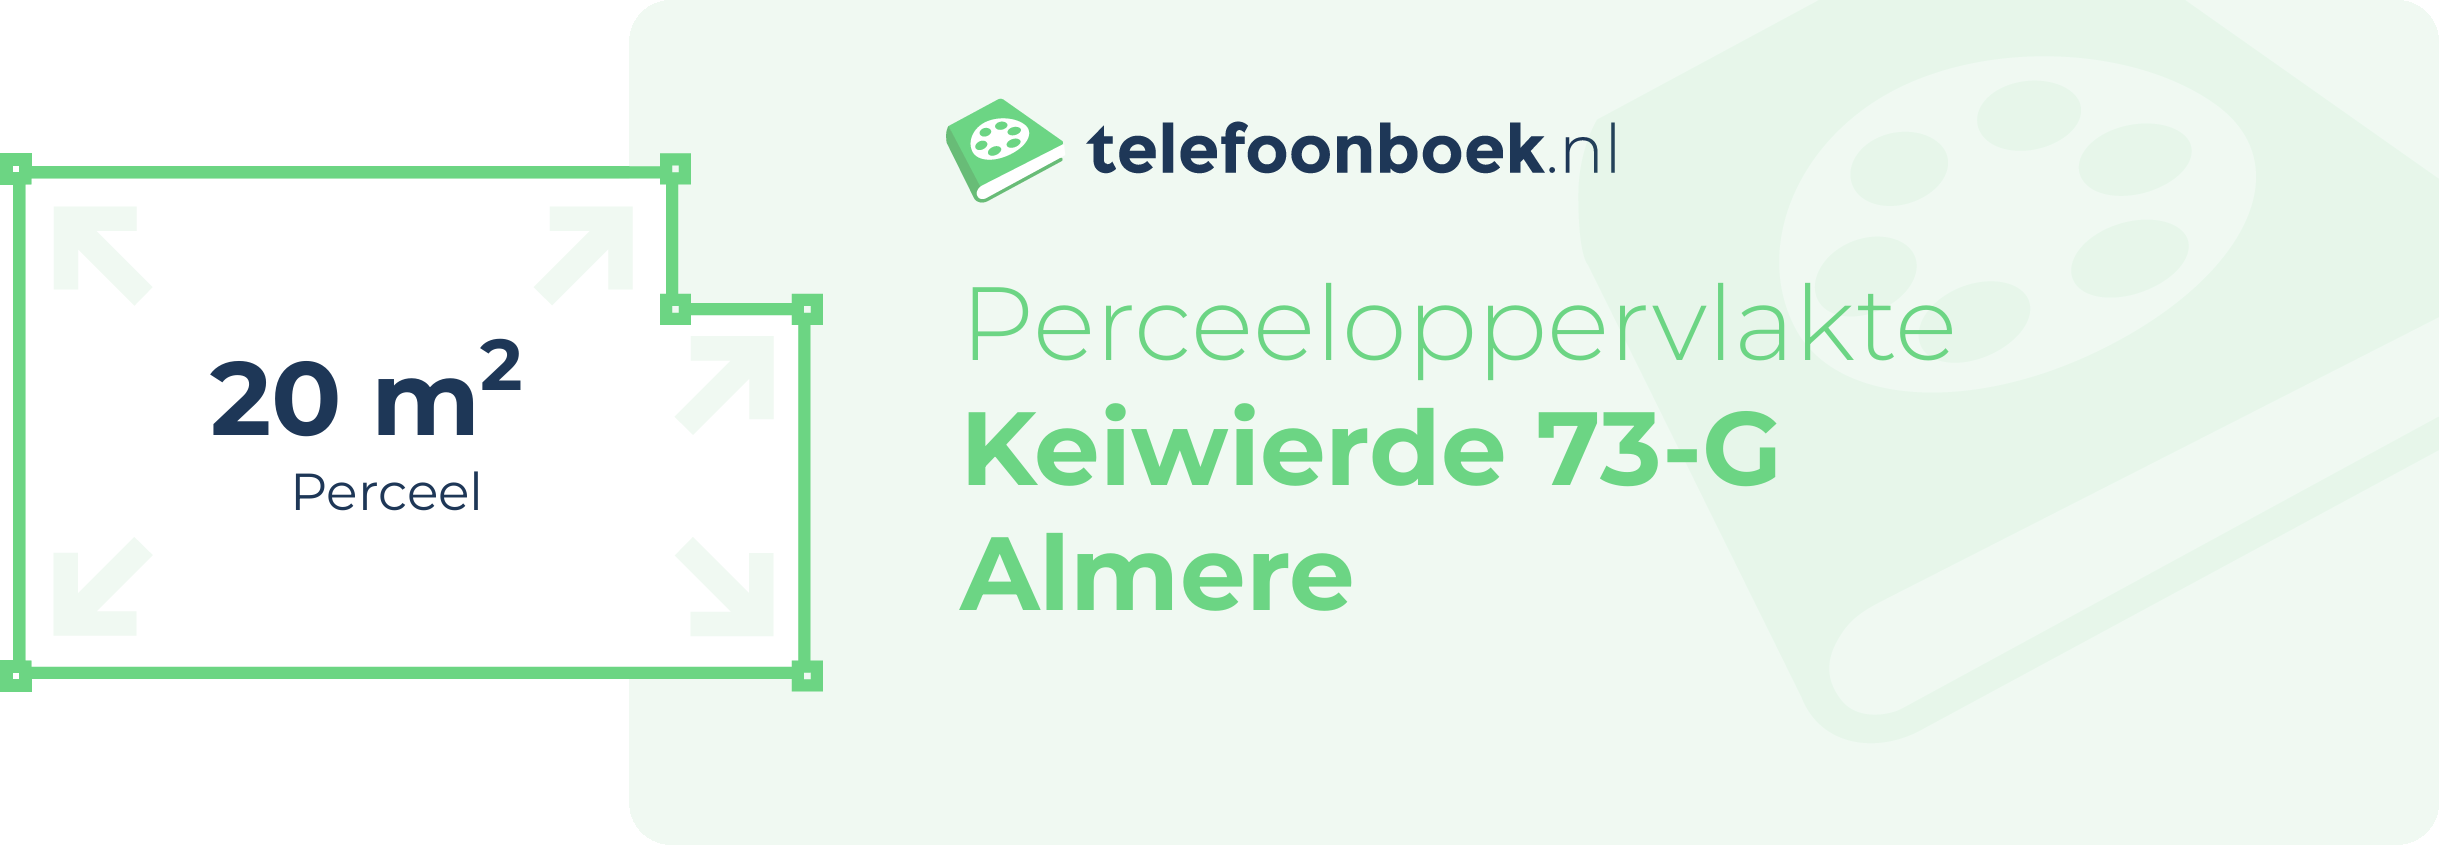 Perceeloppervlakte Keiwierde 73-G Almere